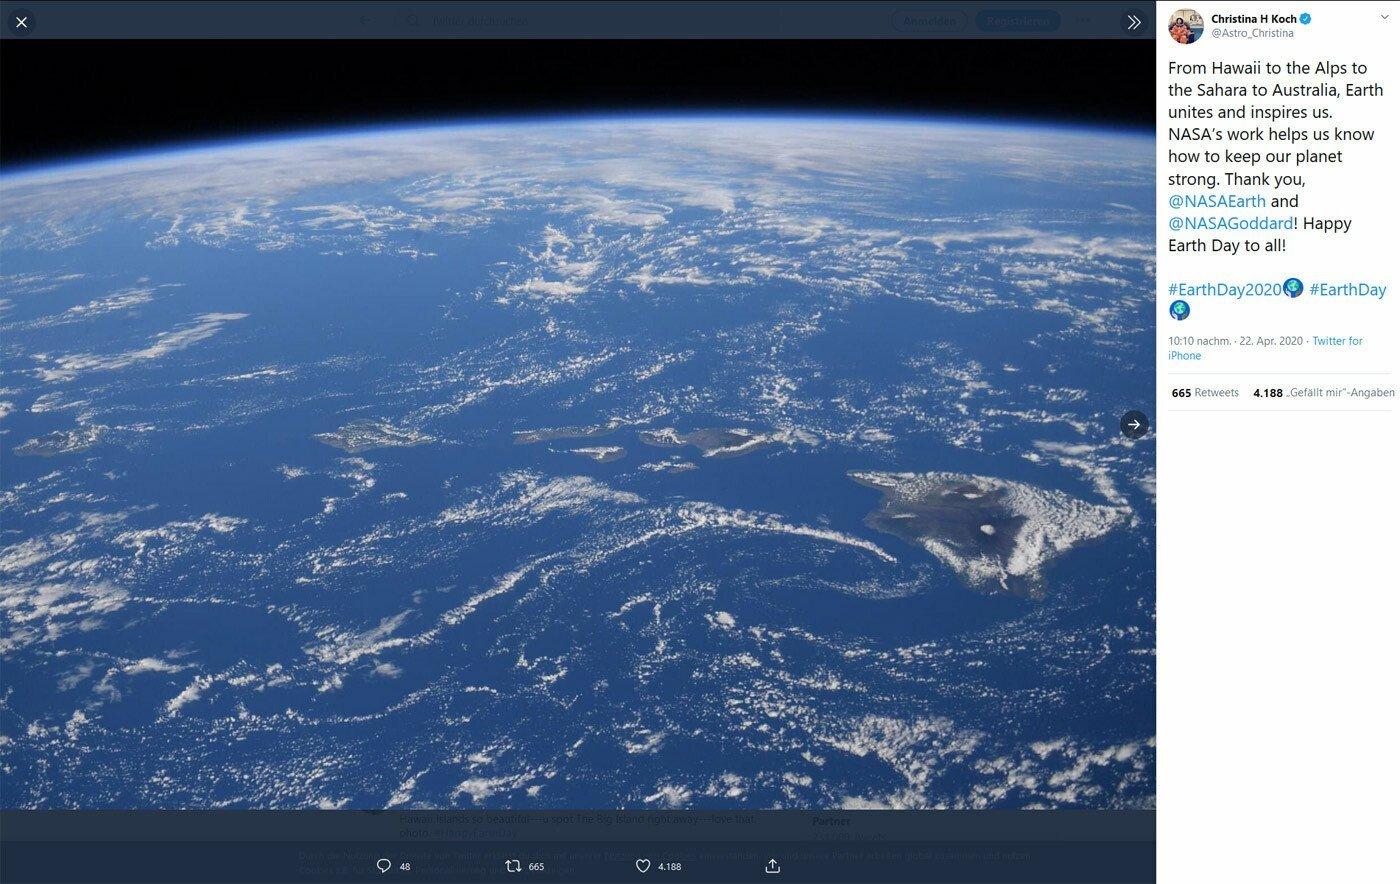 Zum Earth Day 2020 präsentiert die Astronautin Christina H. Koch vier Bilder: Hawaii, Alpen, Sahara, Australien.